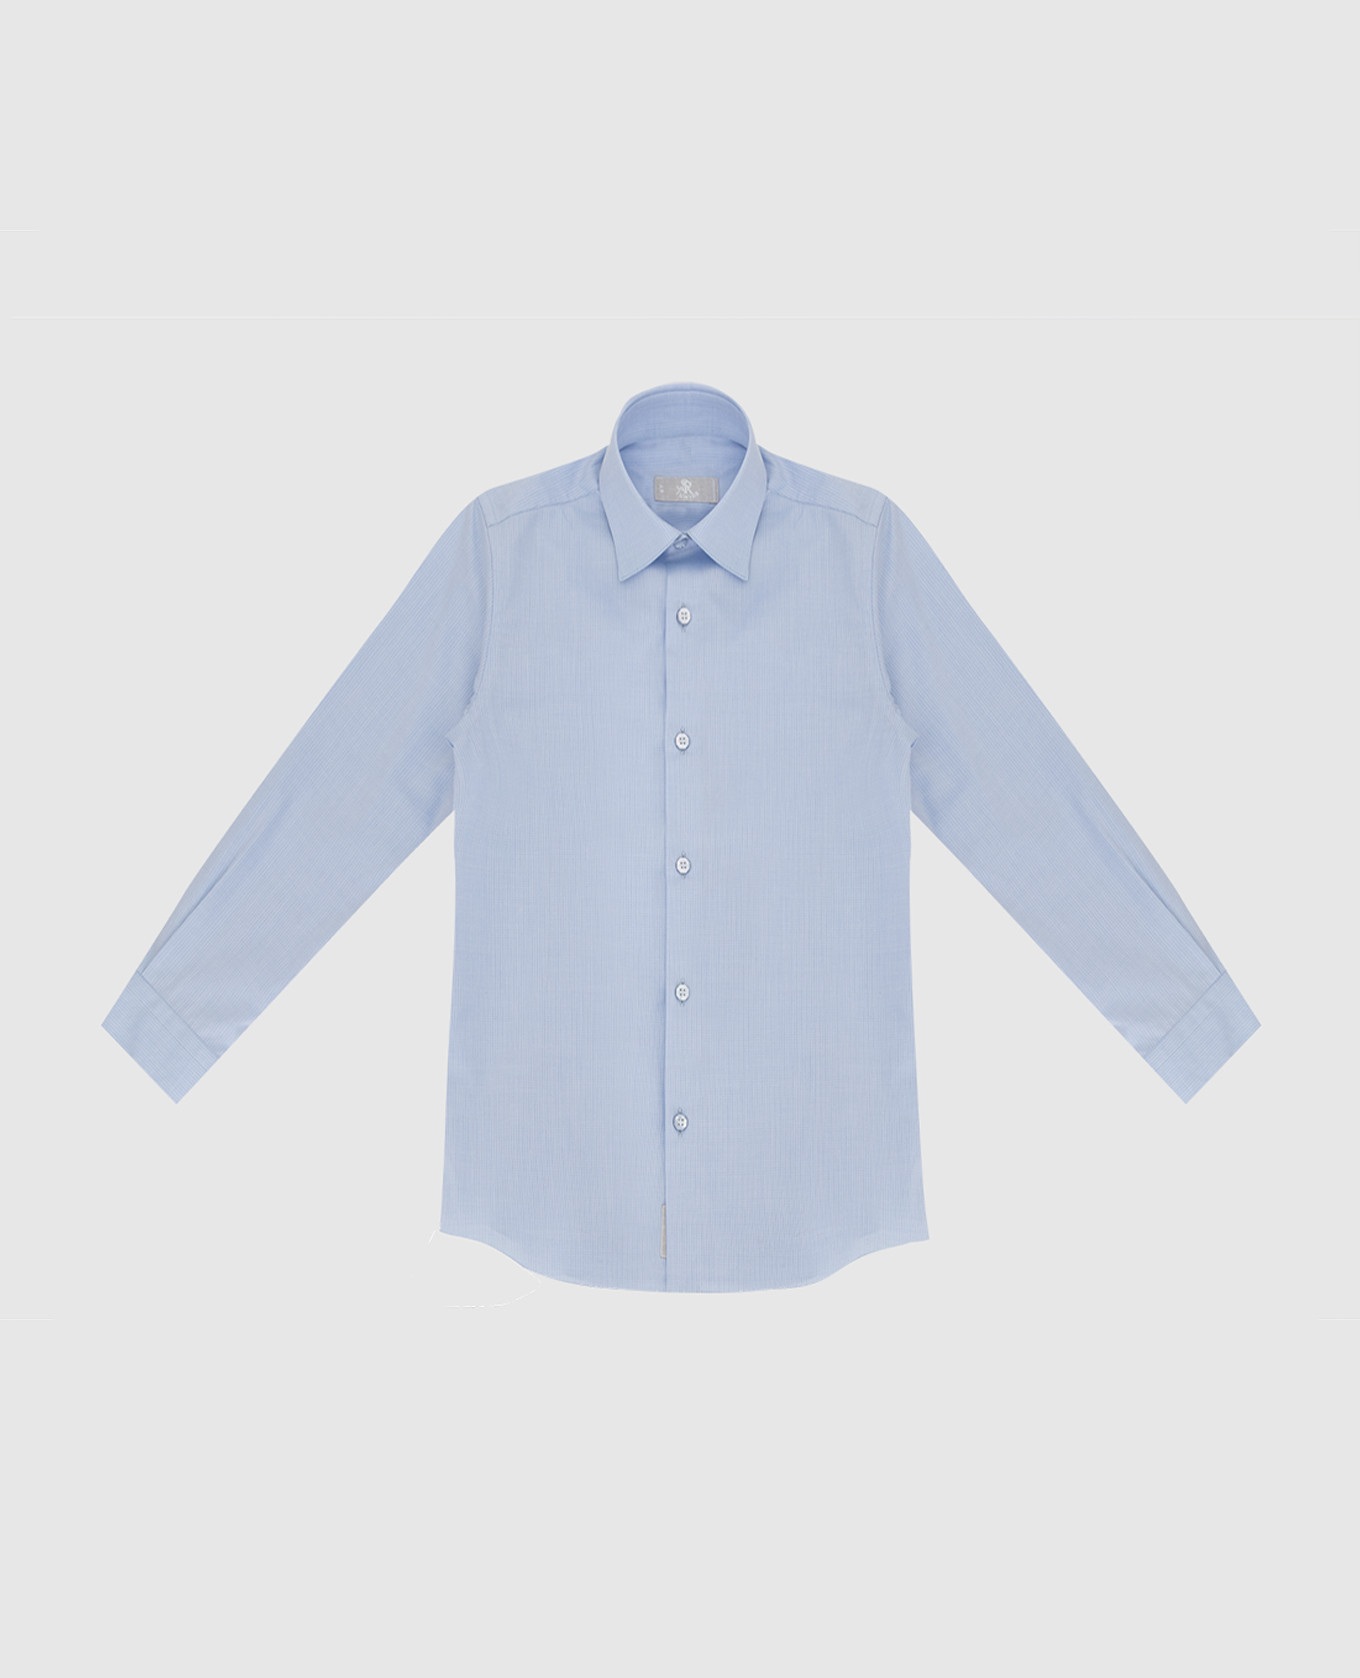 Children's blue shirt in a pattern